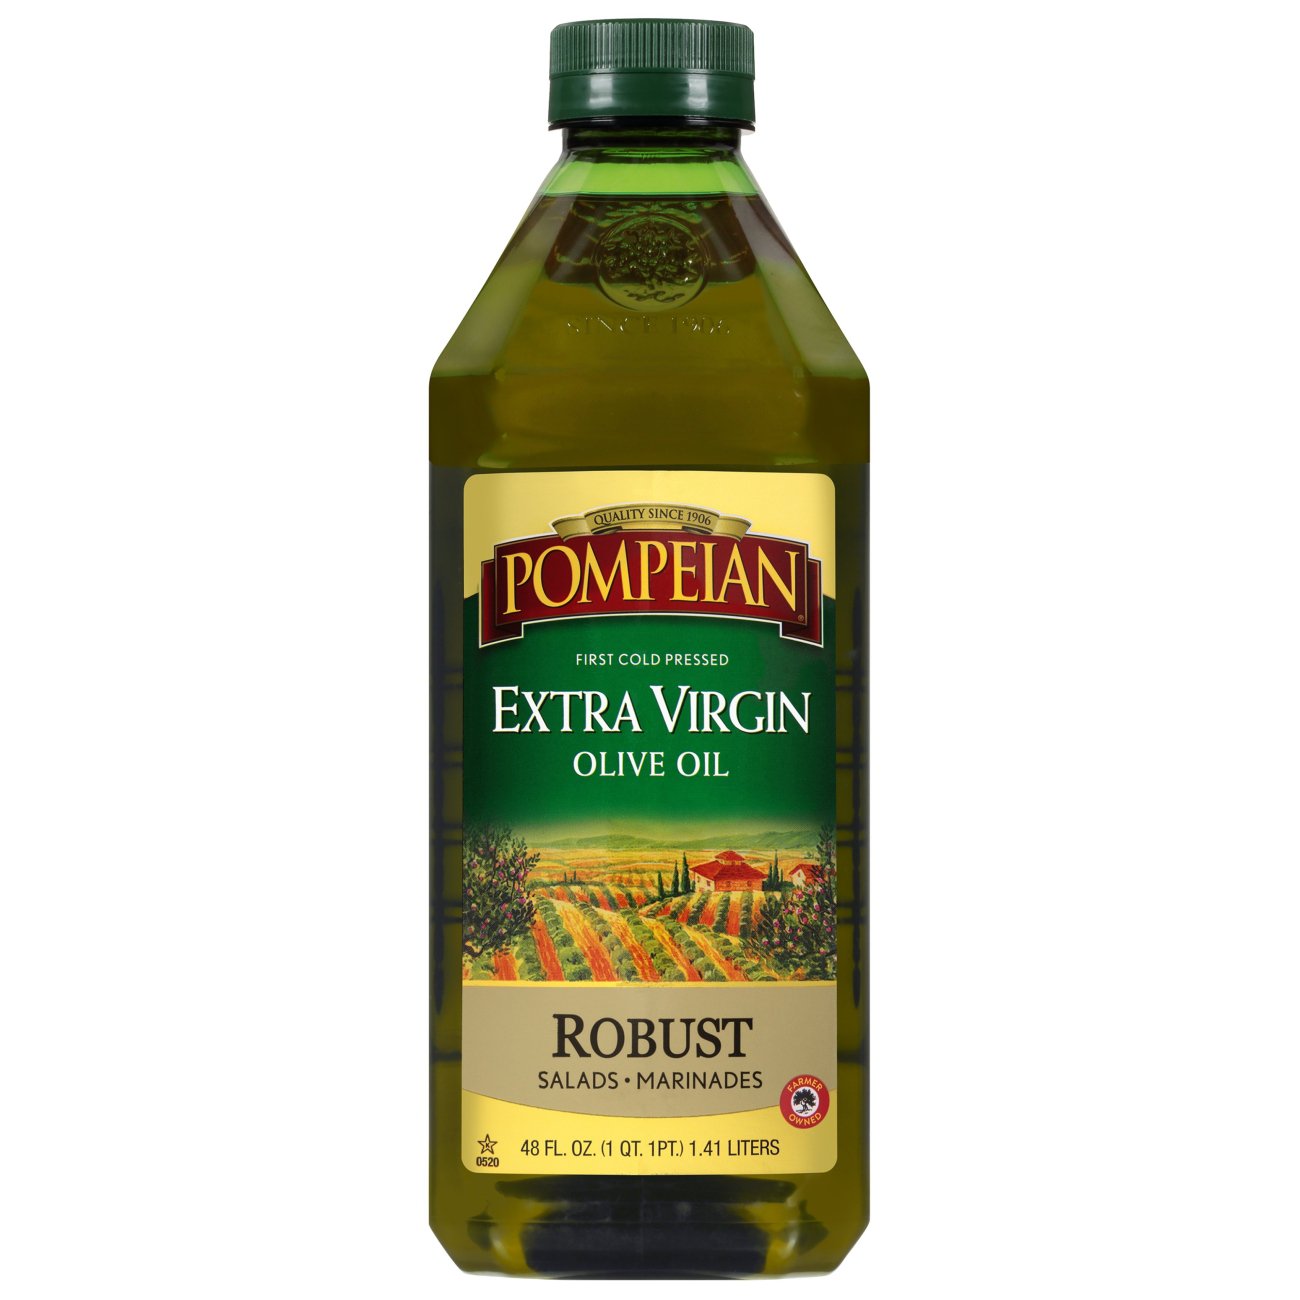 Pompeian Extra Virgin Olive Oil - Shop Oils at H-E-B